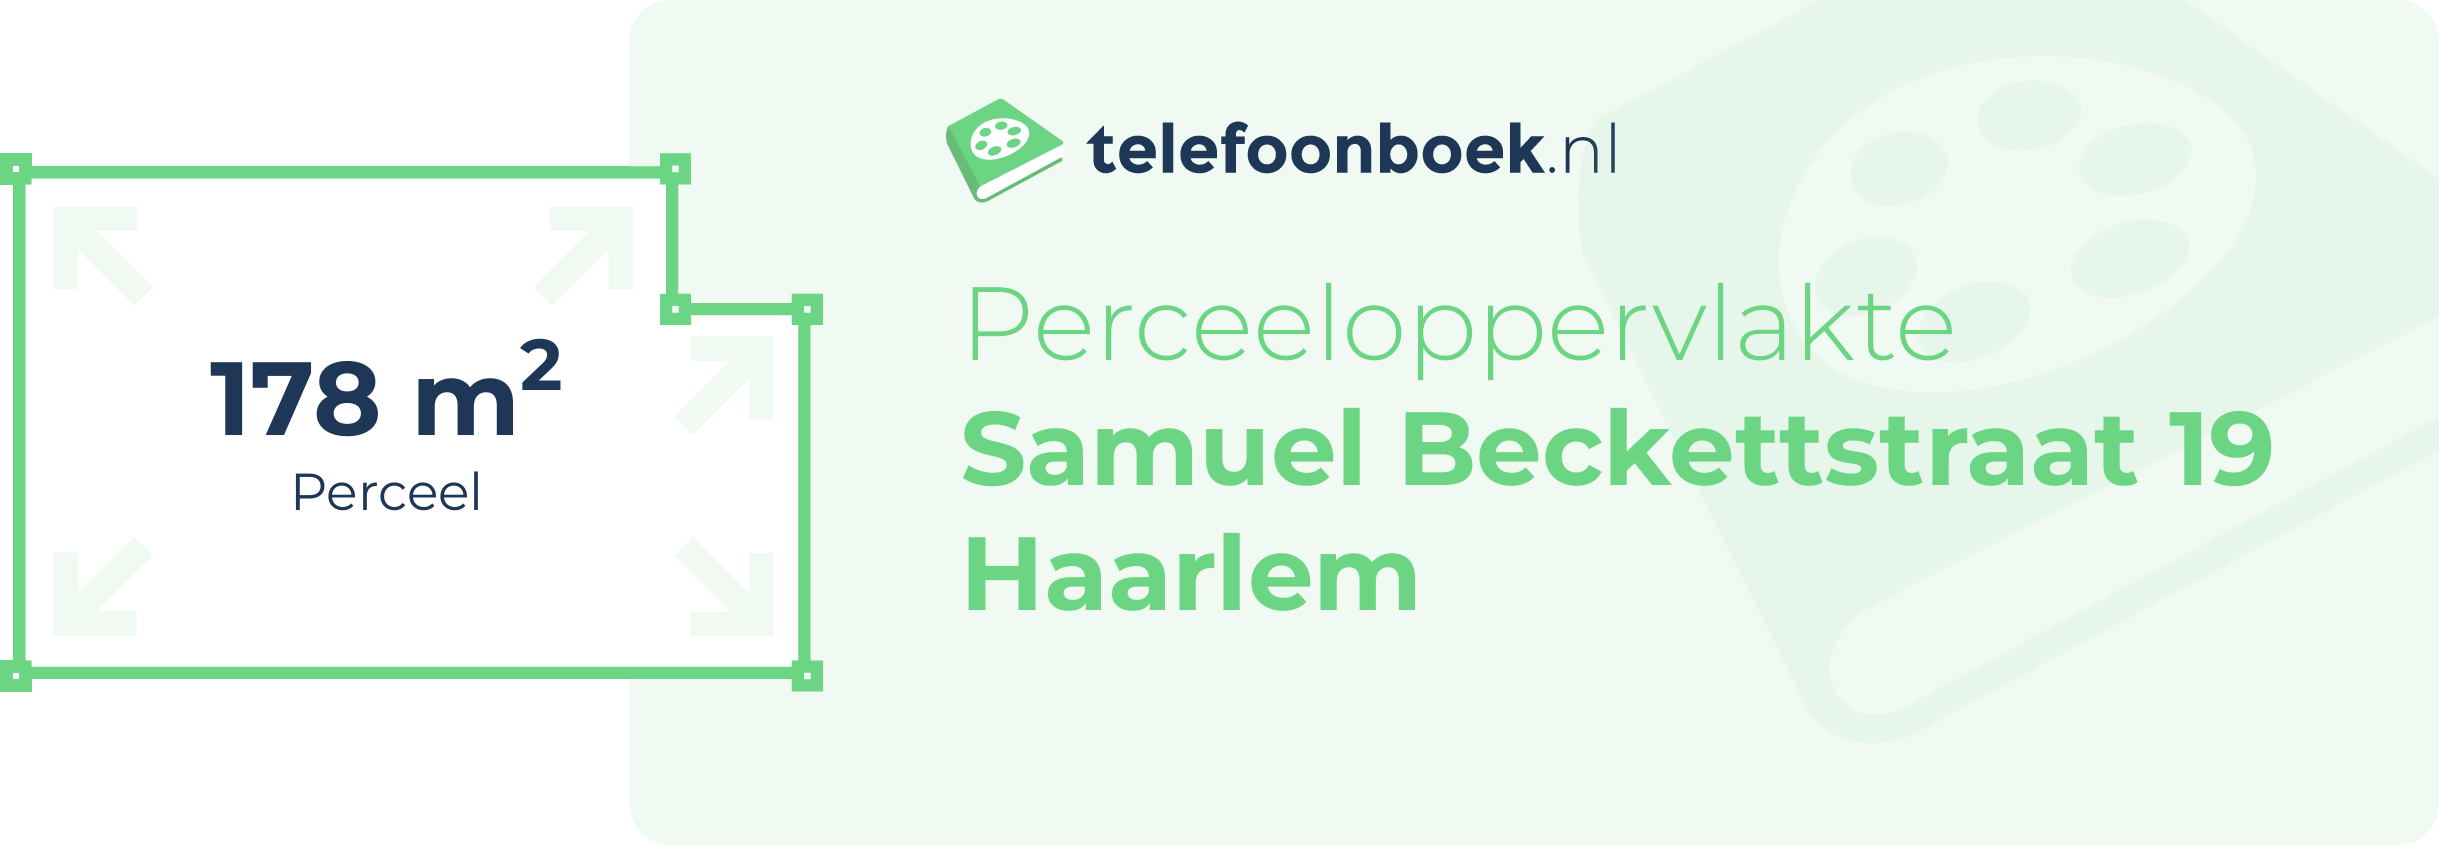 Perceeloppervlakte Samuel Beckettstraat 19 Haarlem